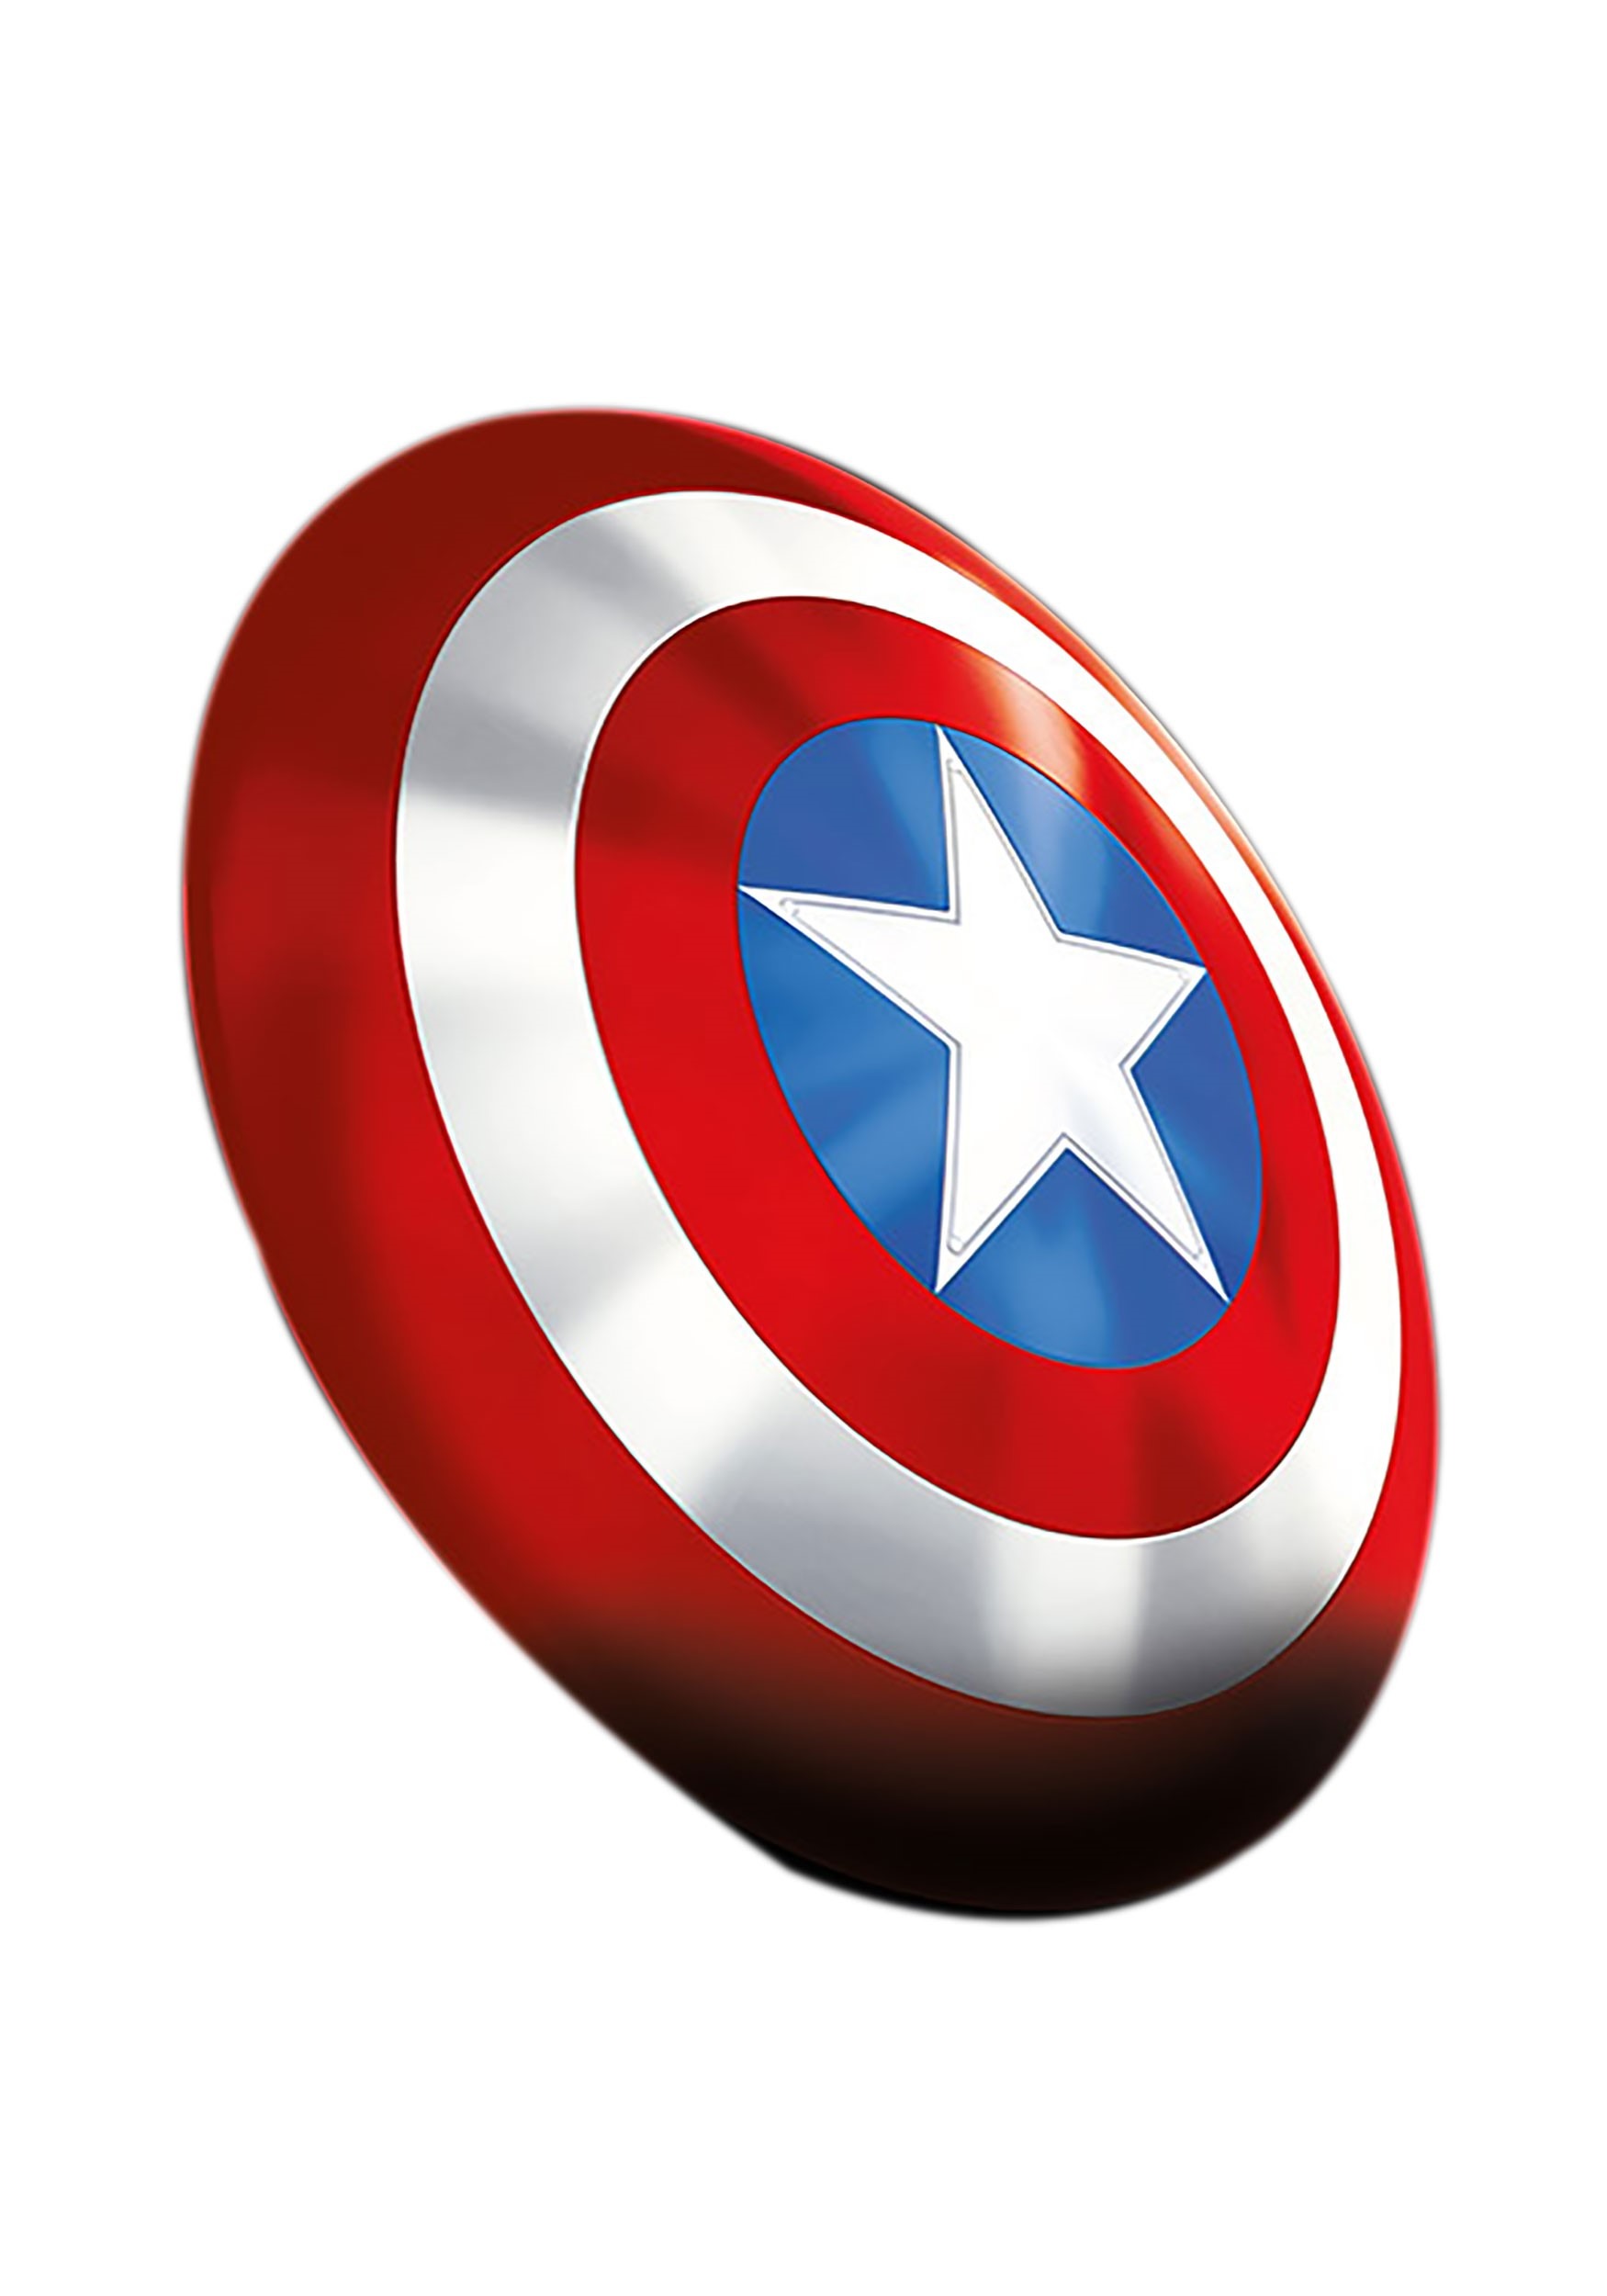 captain america shield toy big w